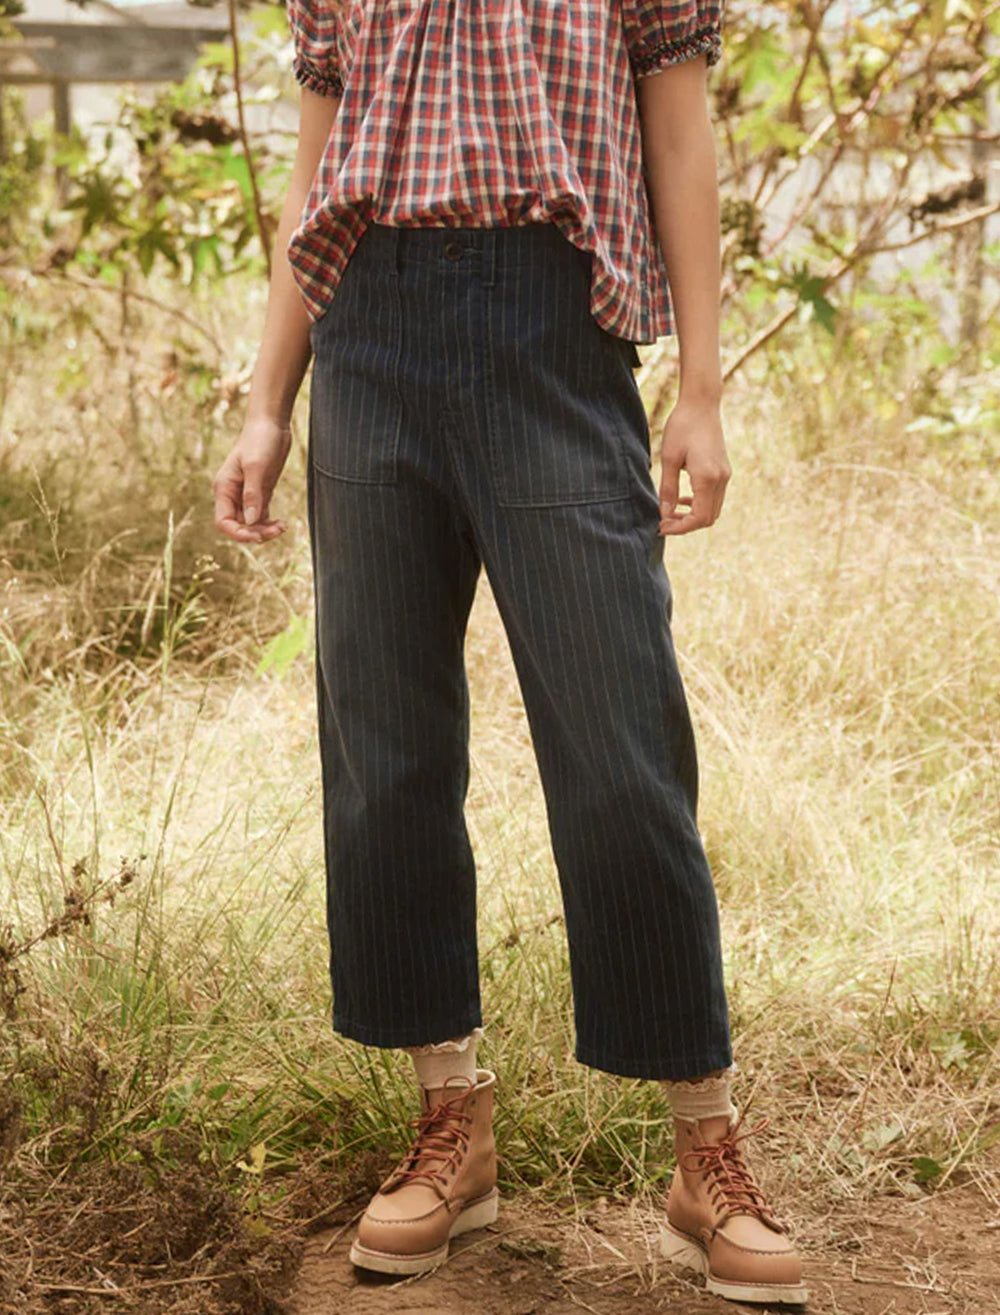 Model wearing The Great's the ranger pant in dark indigo pin stripe.